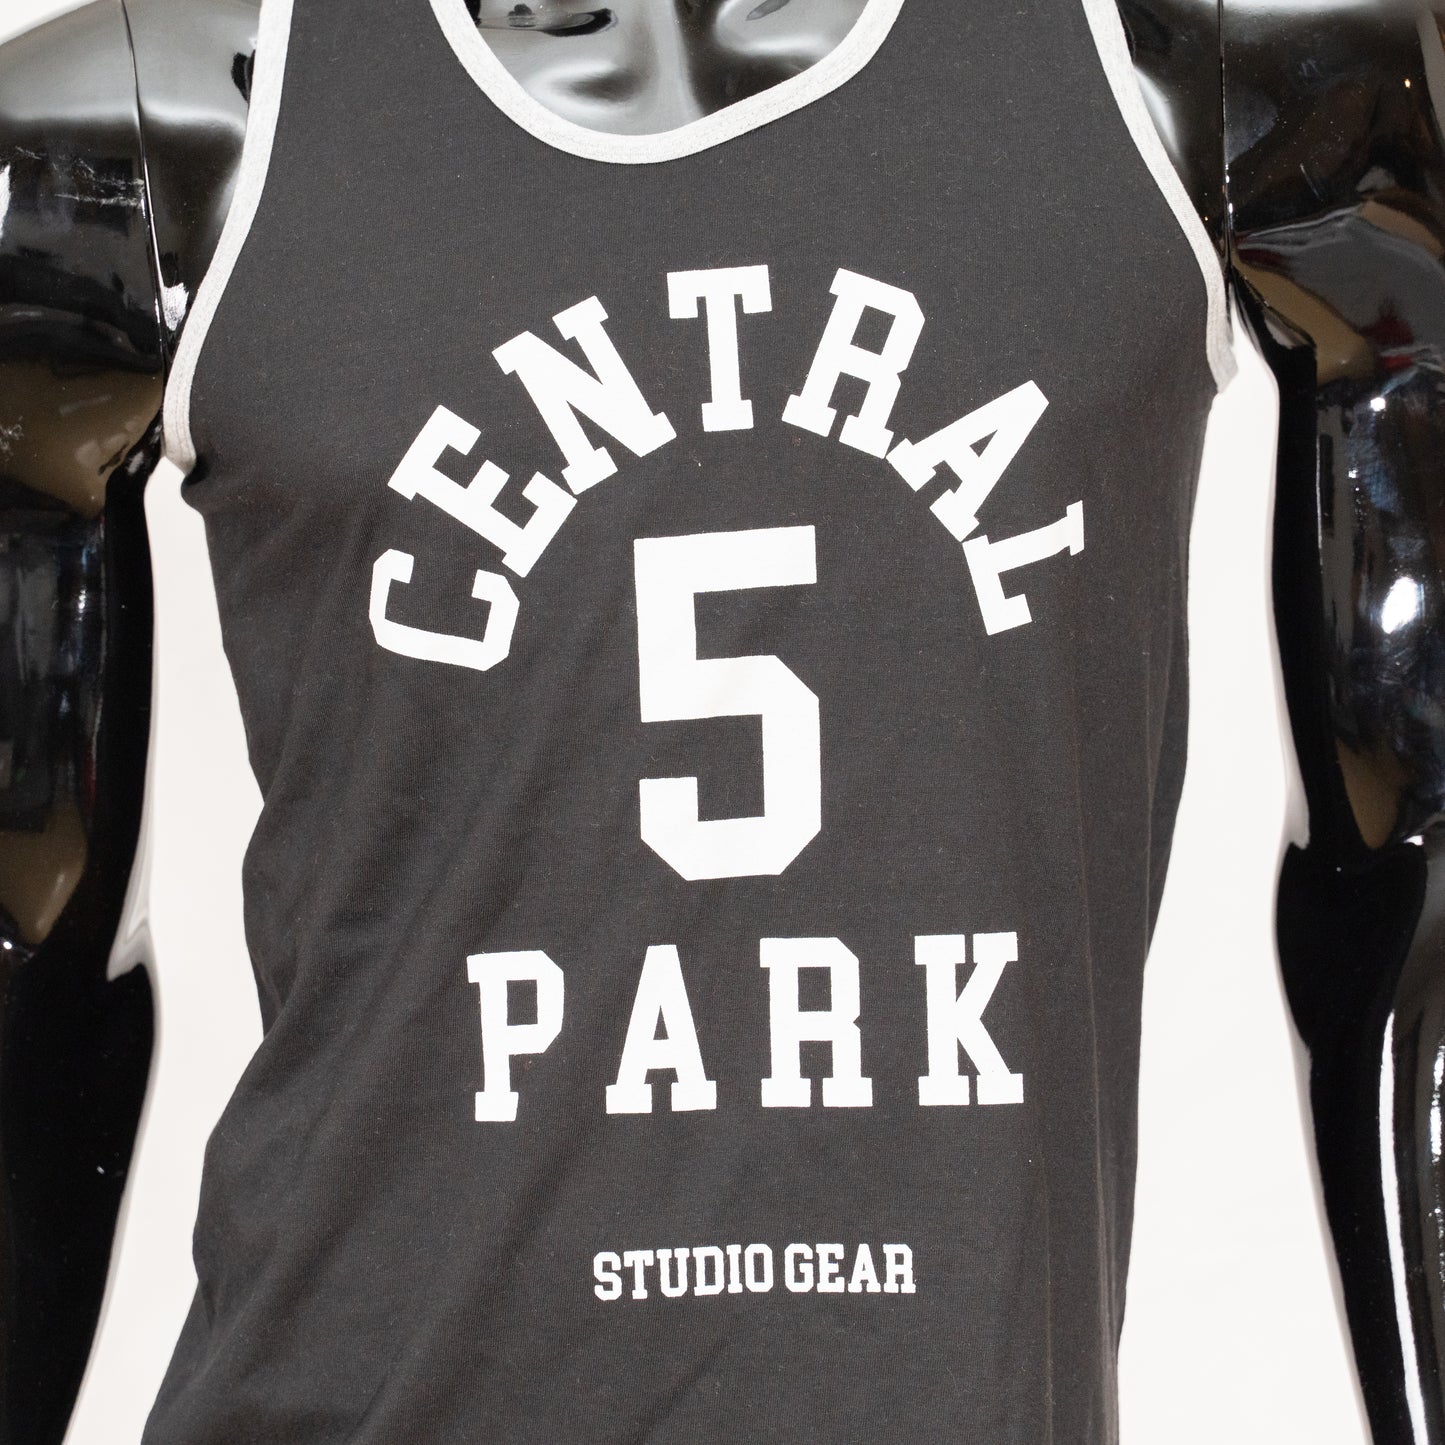 Studio Gear Central Park 5 Athletic Jersey